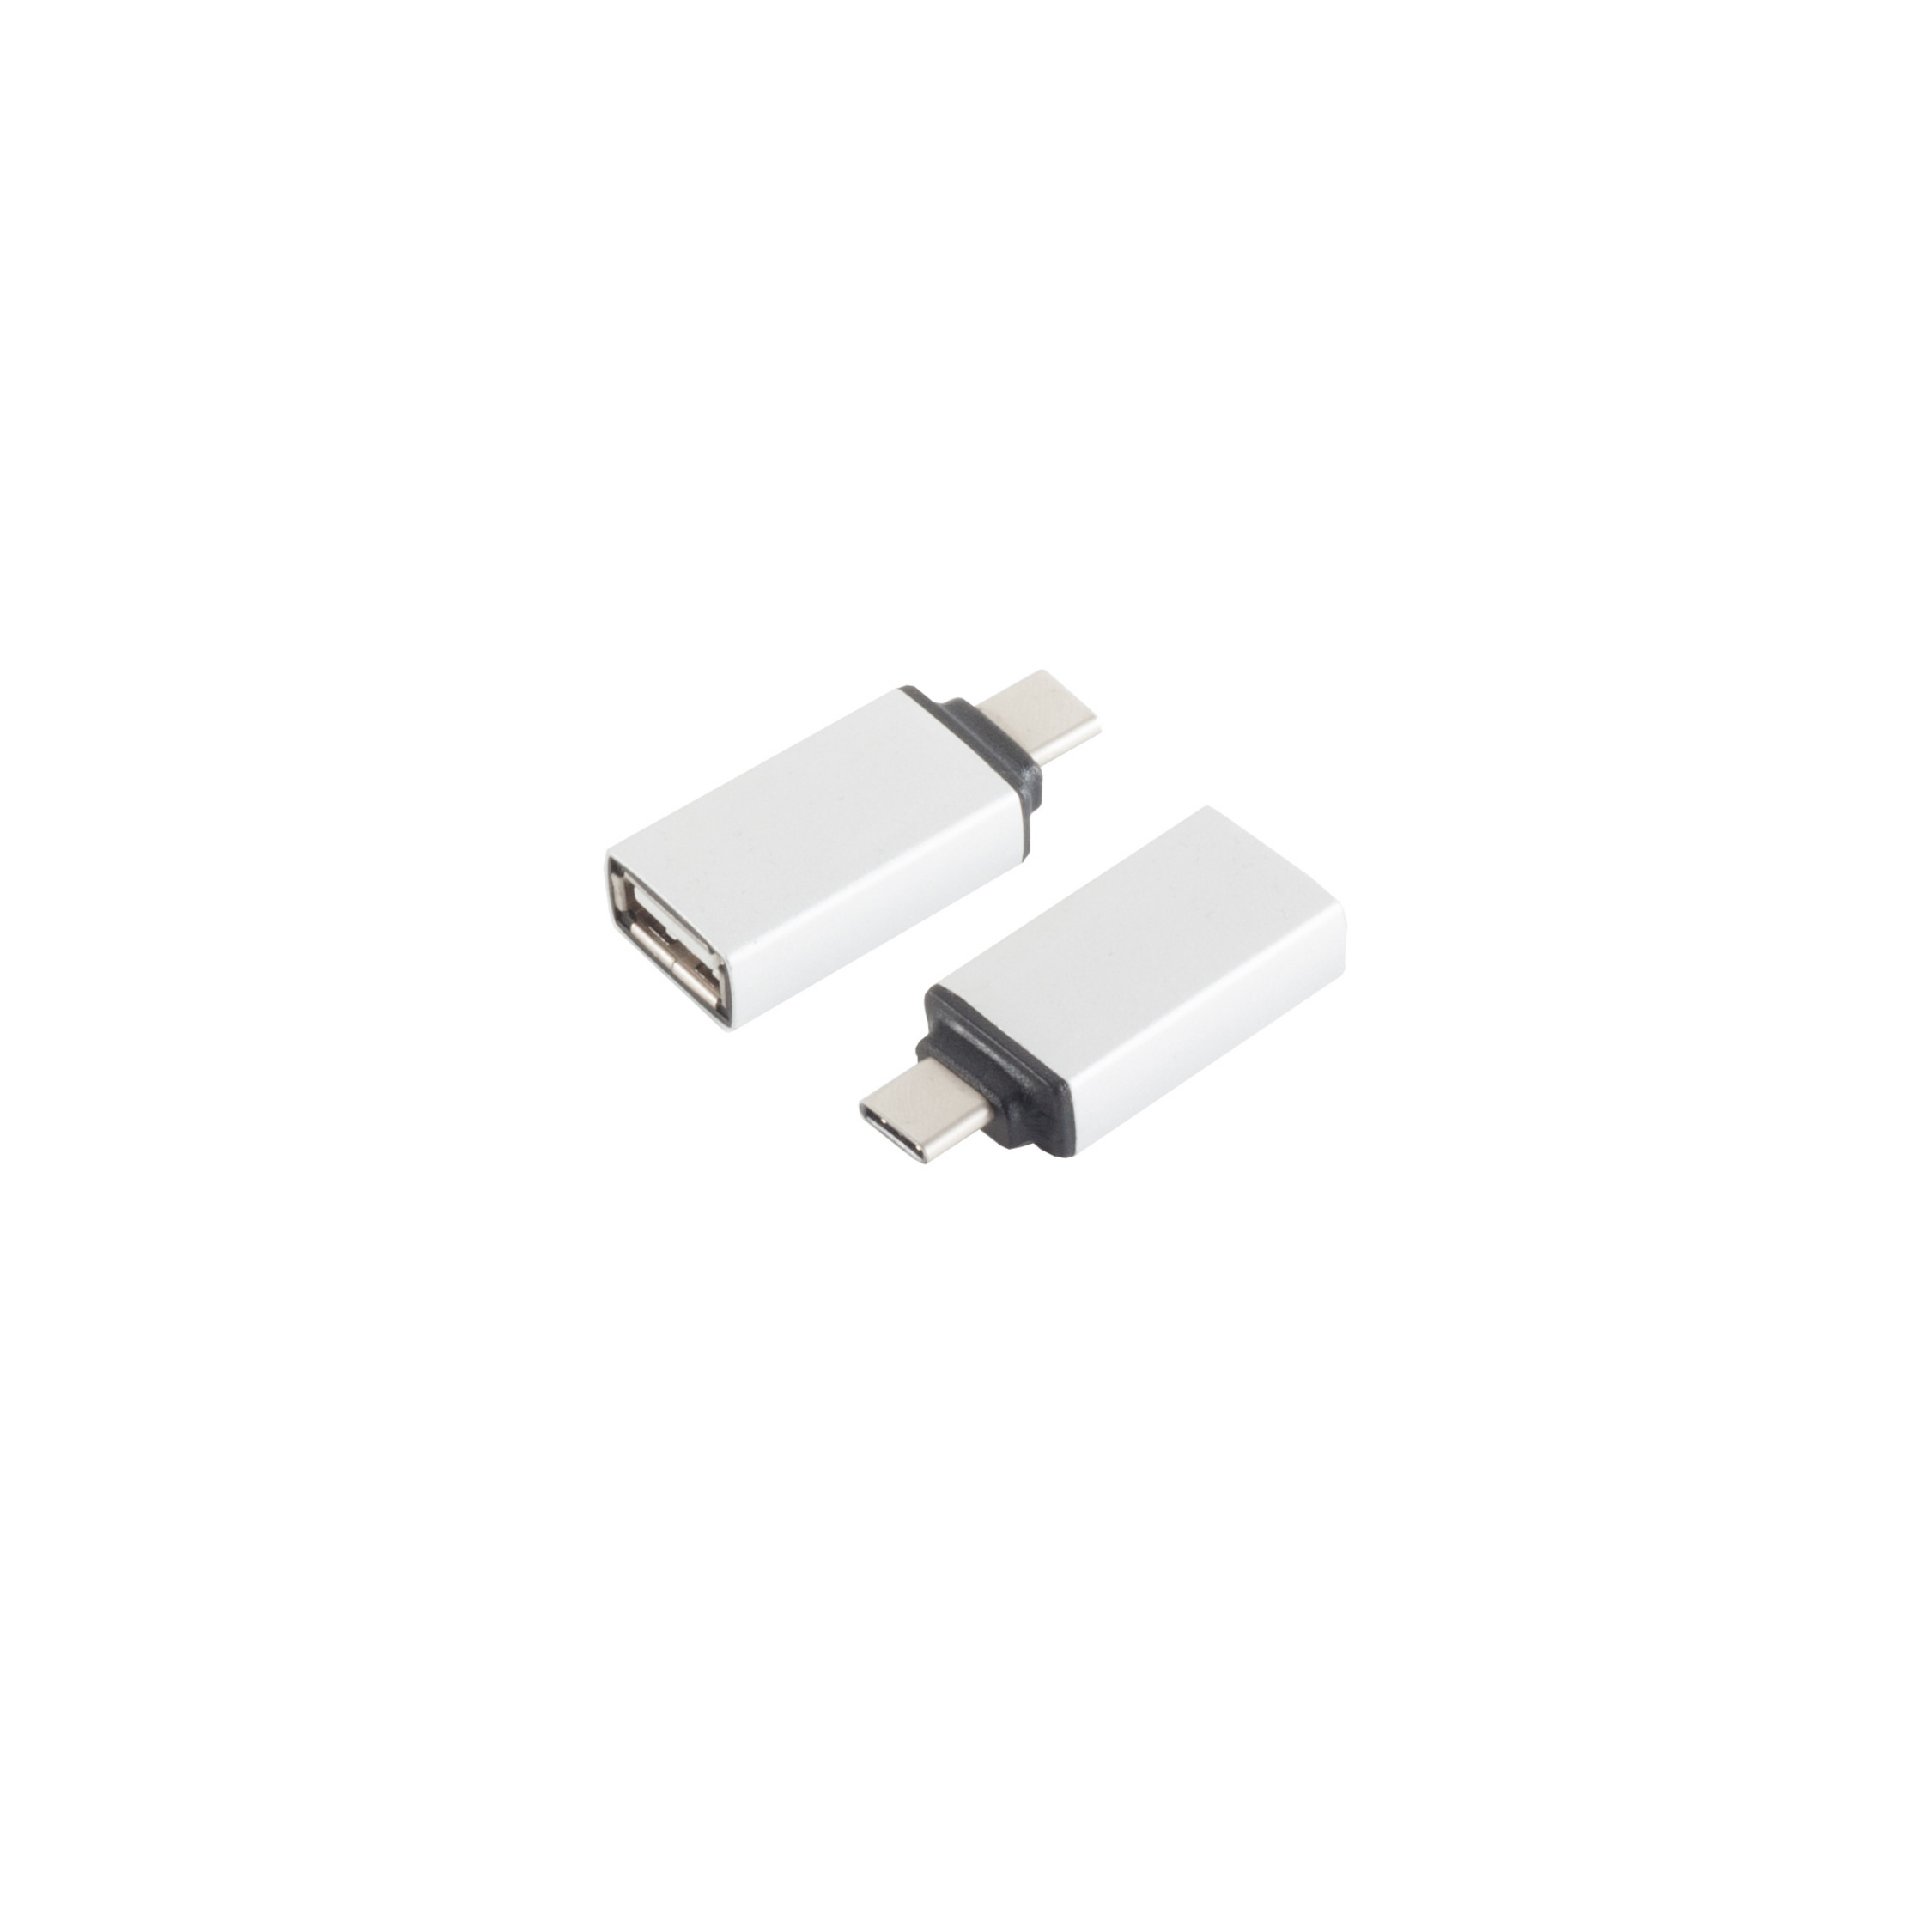 S/CONN MAXIMUM CONNECTIVITY C Stecker/ A USB-C Adapter USB 2.0 Buchse Adapter, USB 3.1